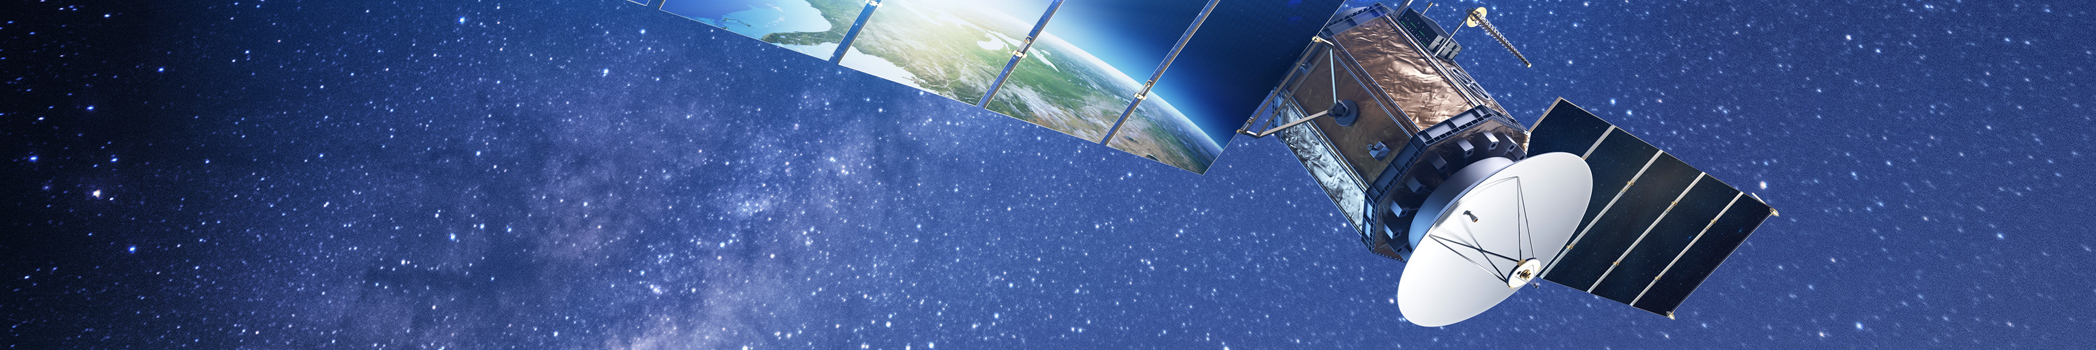 slider background image of satellite